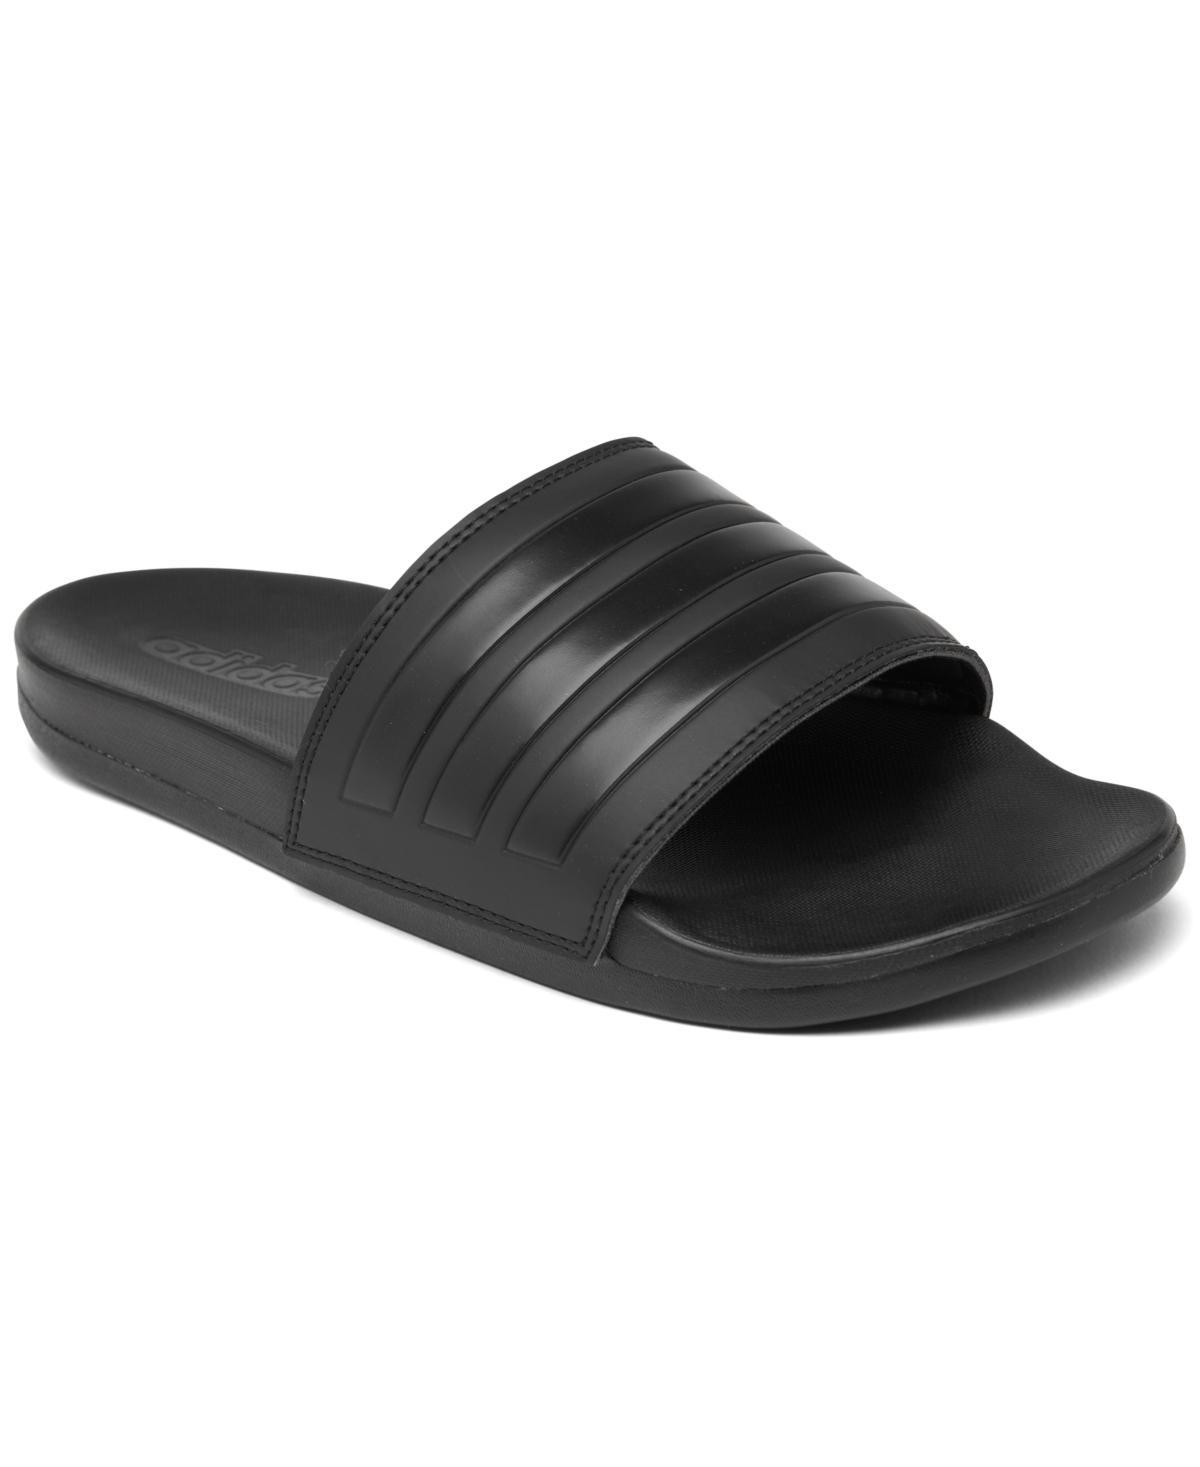 adidas Gender Inclusive Adilette Comfort Sport Slide Sandal Product Image